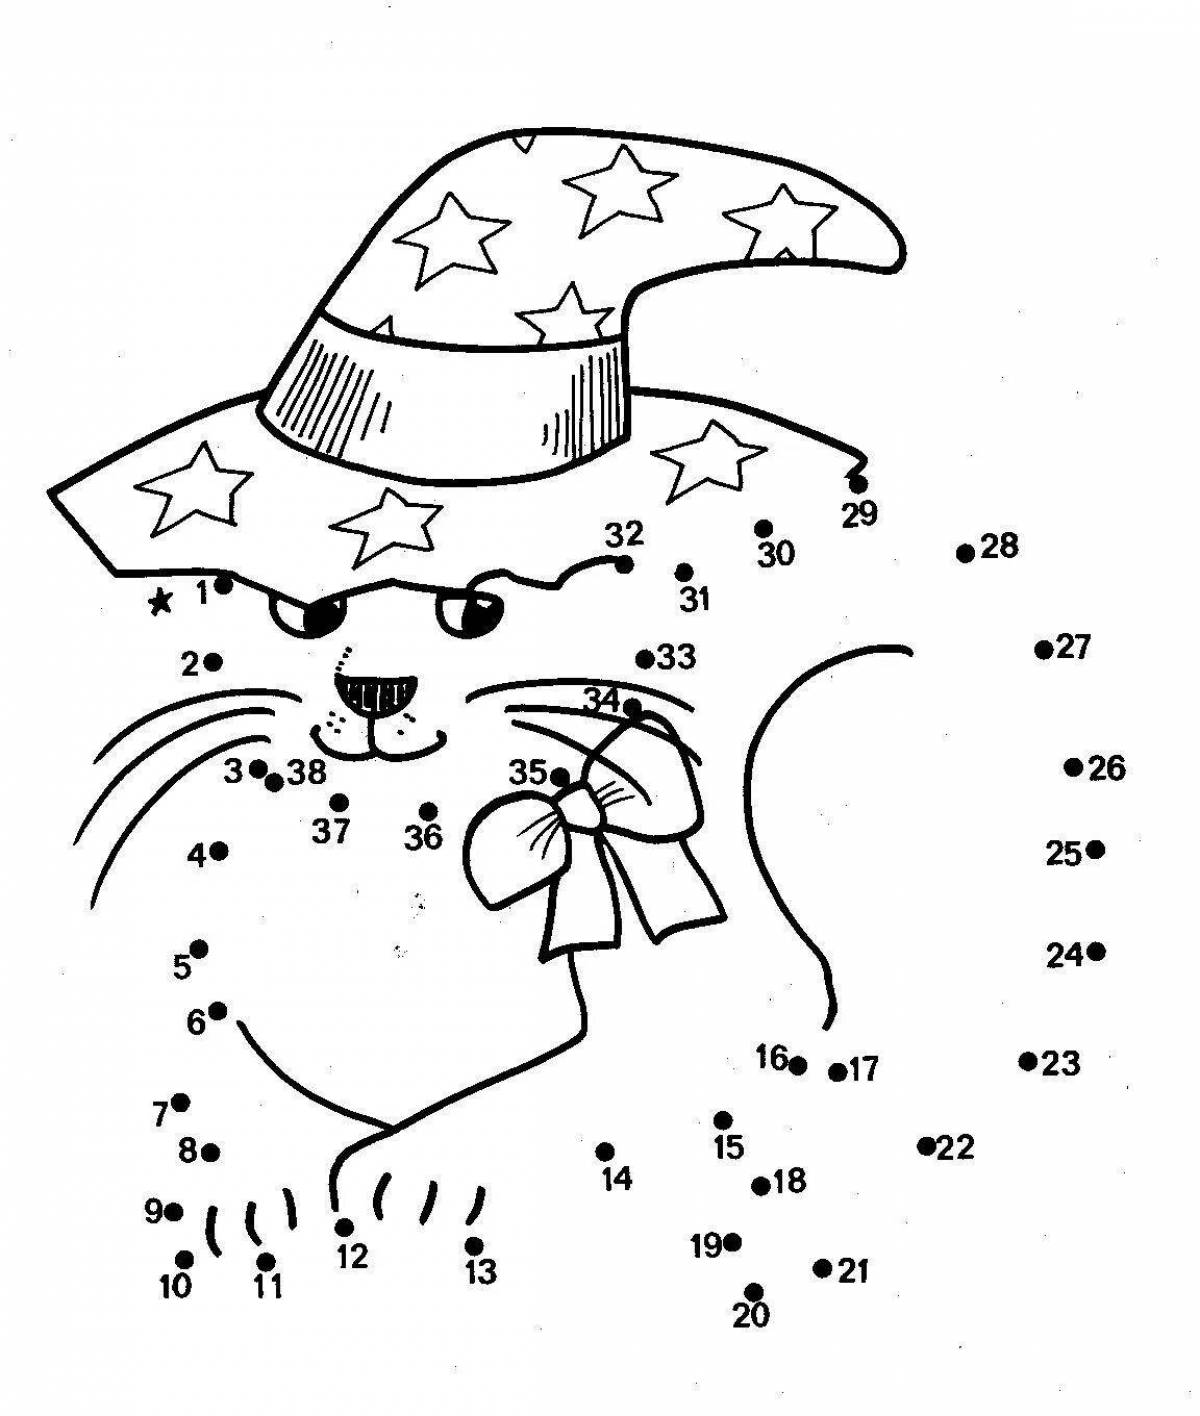 Adorable polka dot cat coloring page